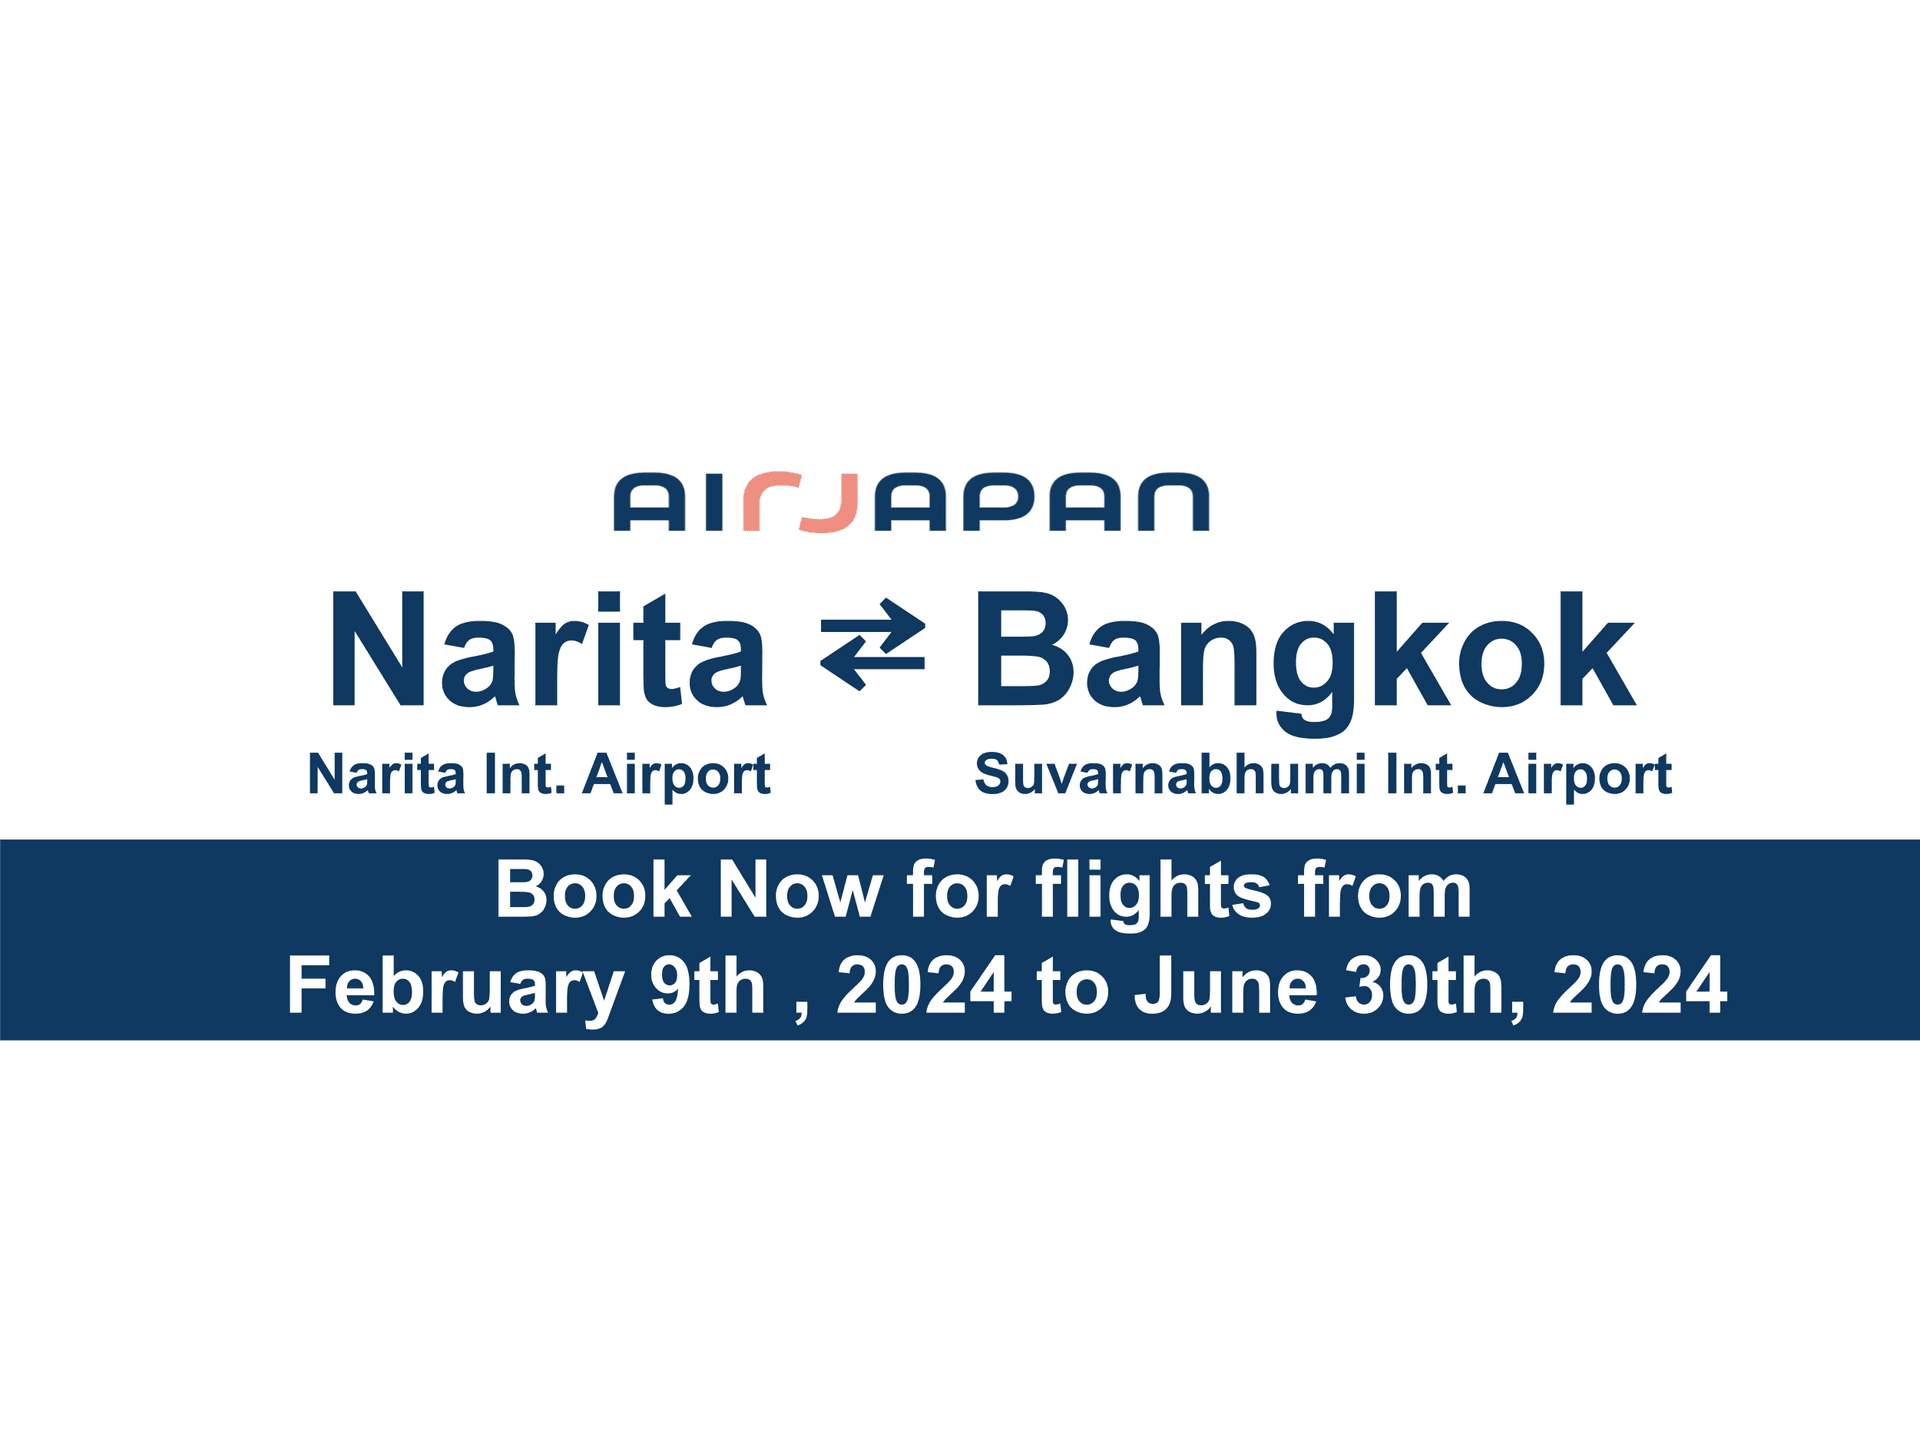 The 2024 summer schedule between Narita ⇔ Bangkok is now on sale.